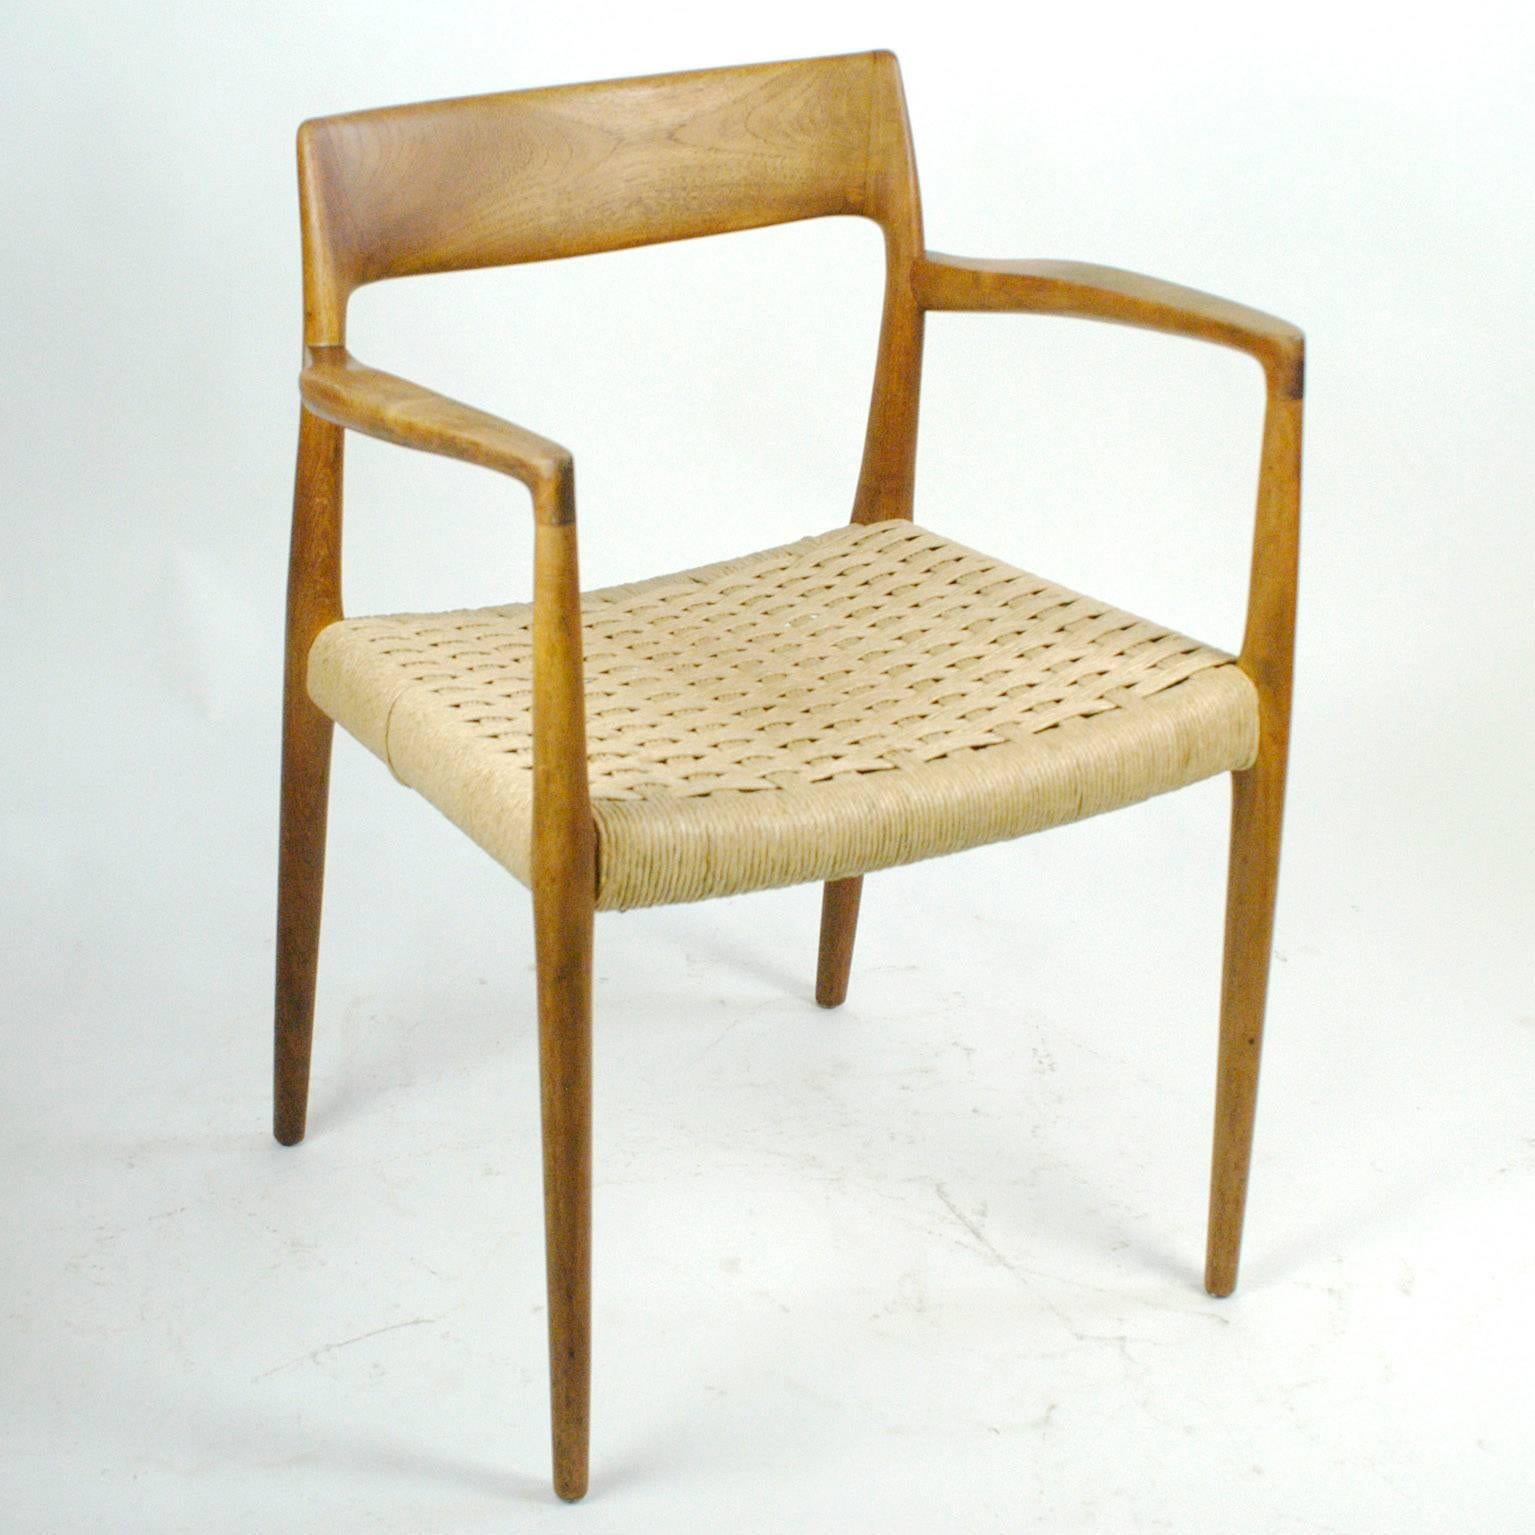 Scandinavian teak armchair by N. O. Möller for J. L. Möllers Møbelfabrik with its original papercord seat.